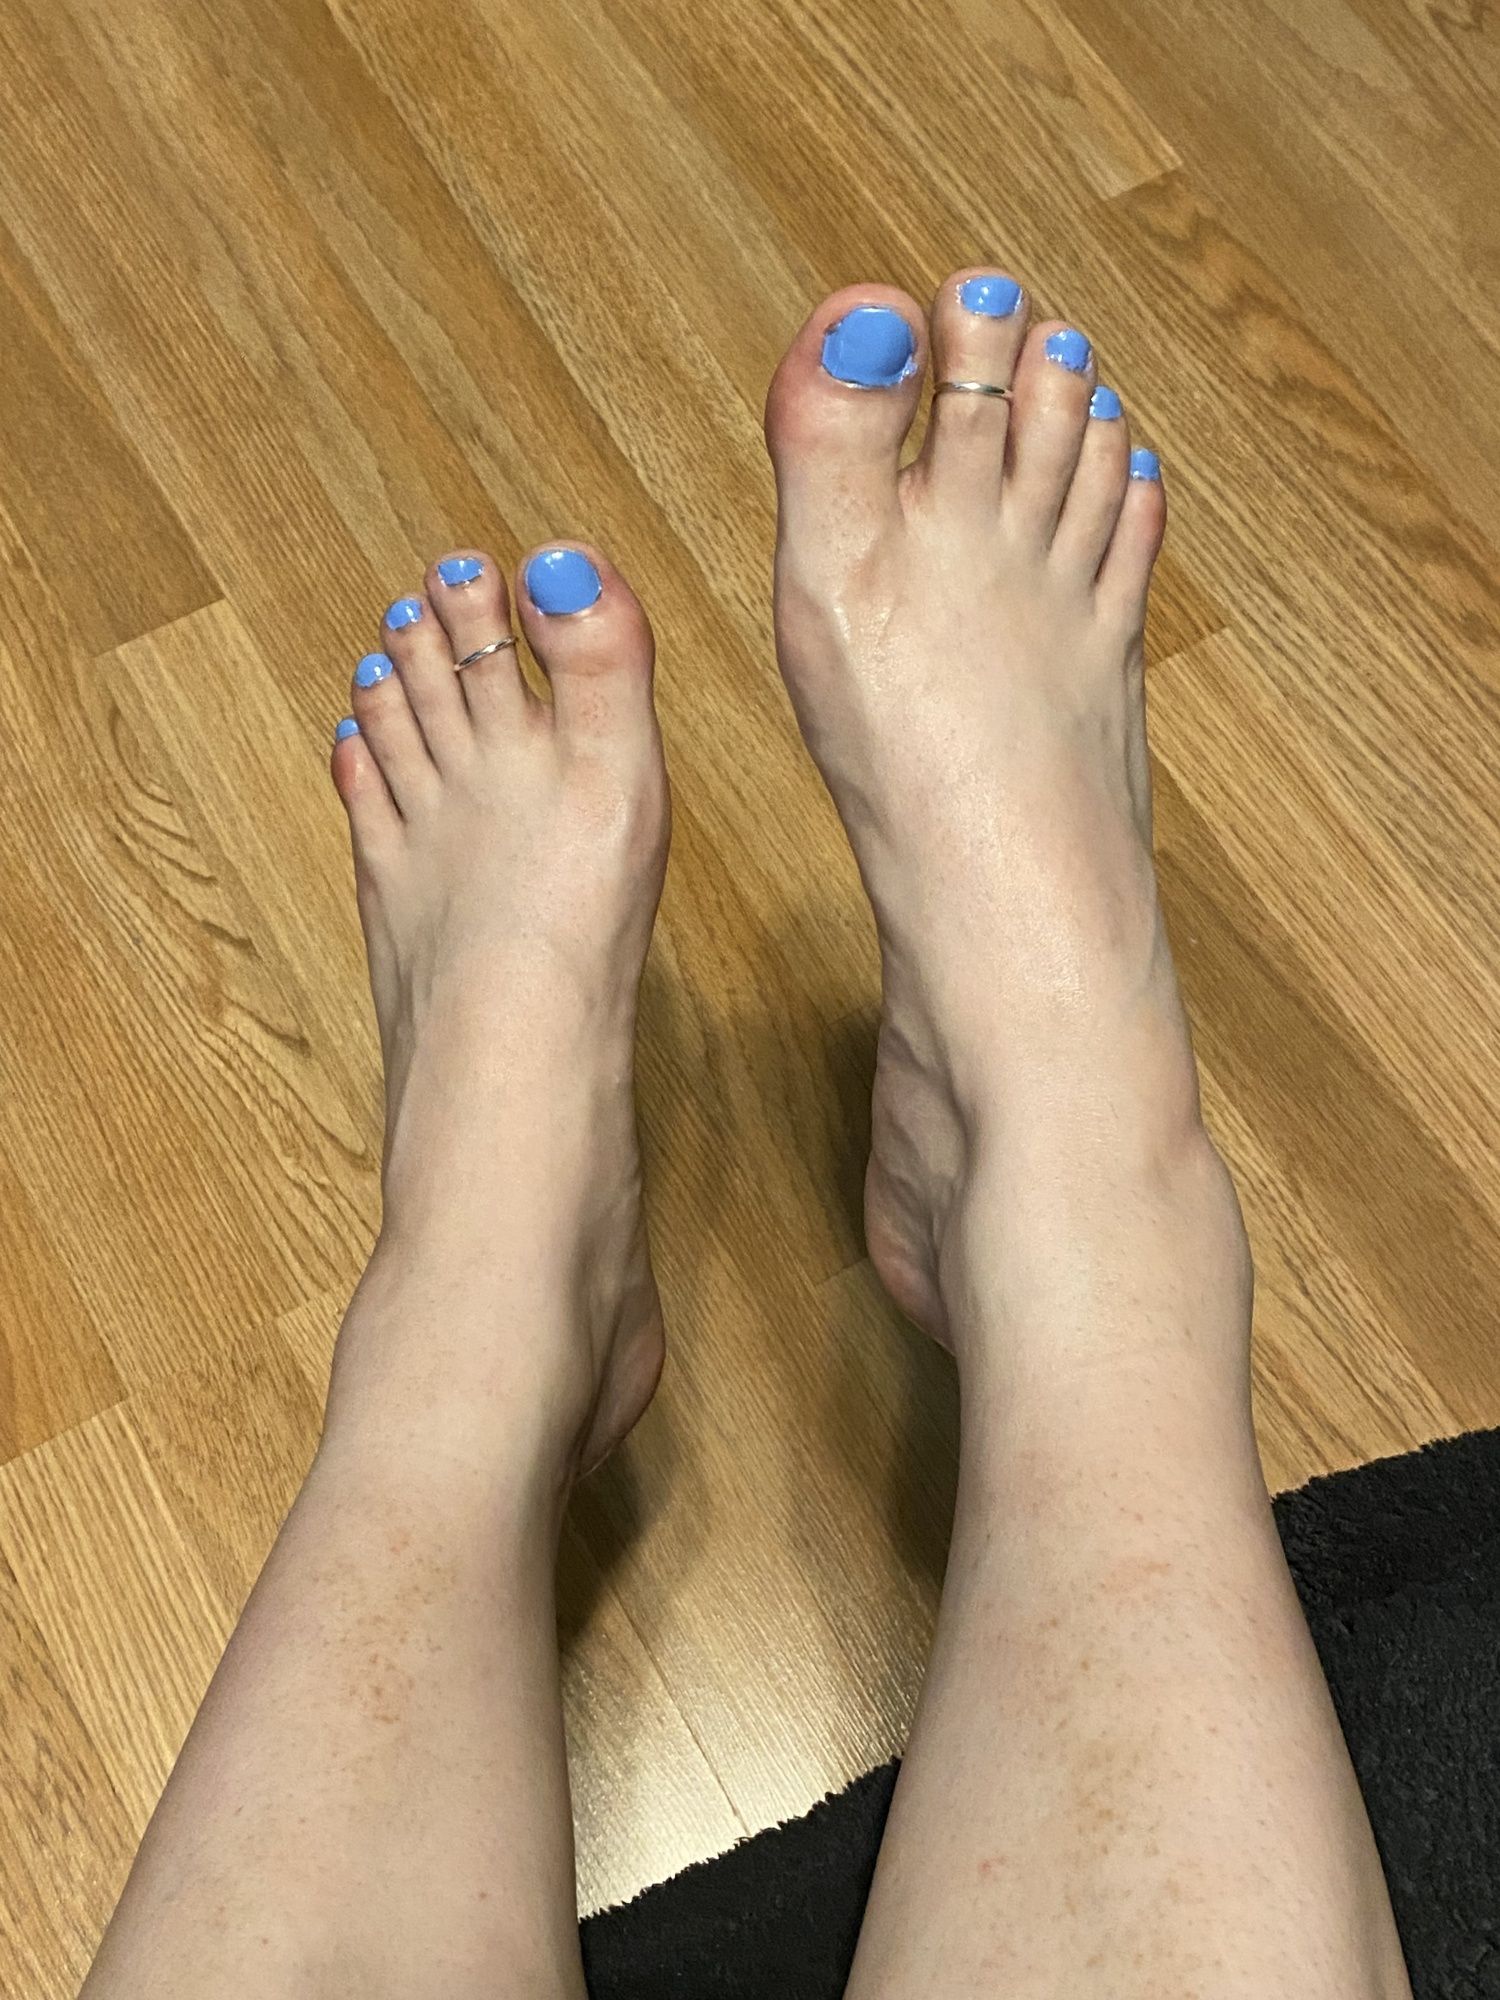 Pretty Feet and Toe Rings #5